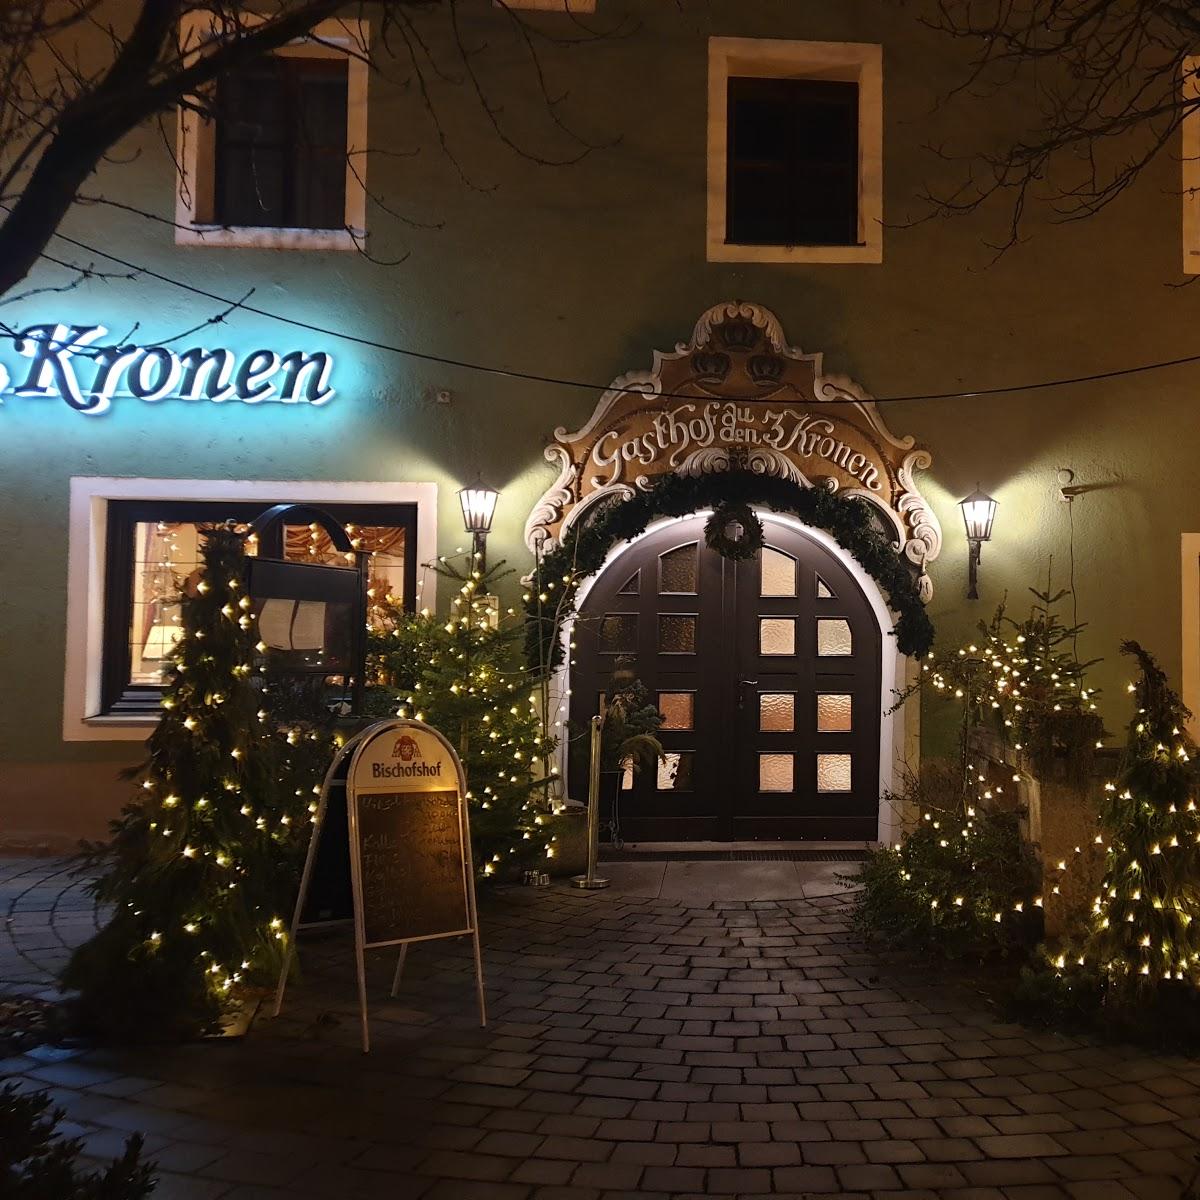 Restaurant "Gasthof zu den 3 Kronen" in Burglengenfeld